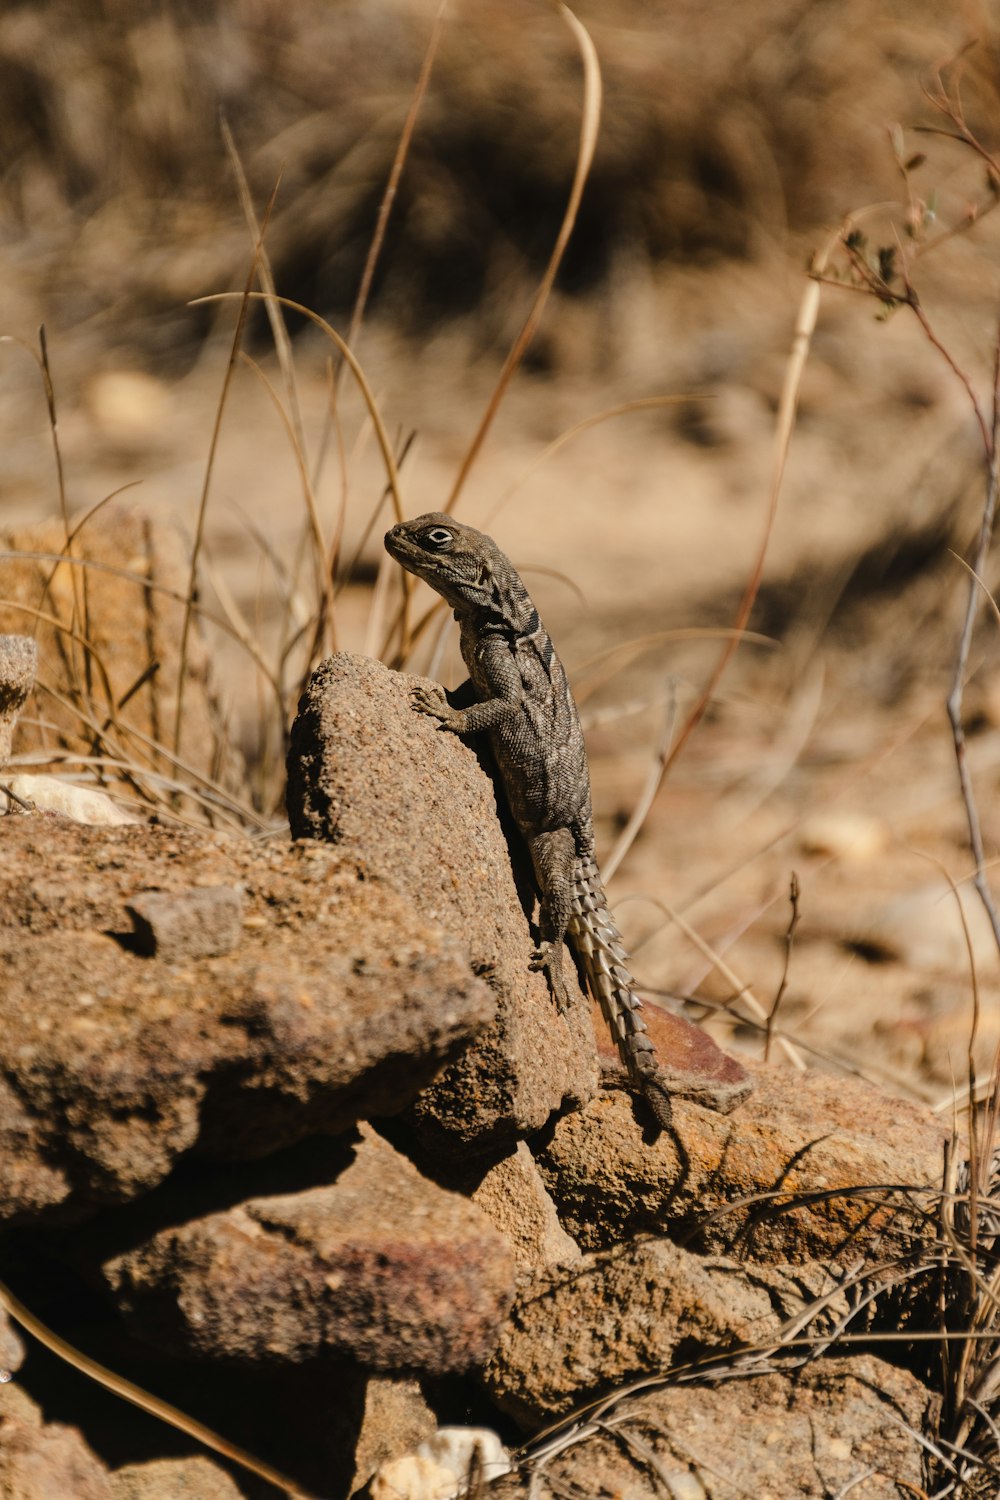 a lizard sitting on a rock in the desert